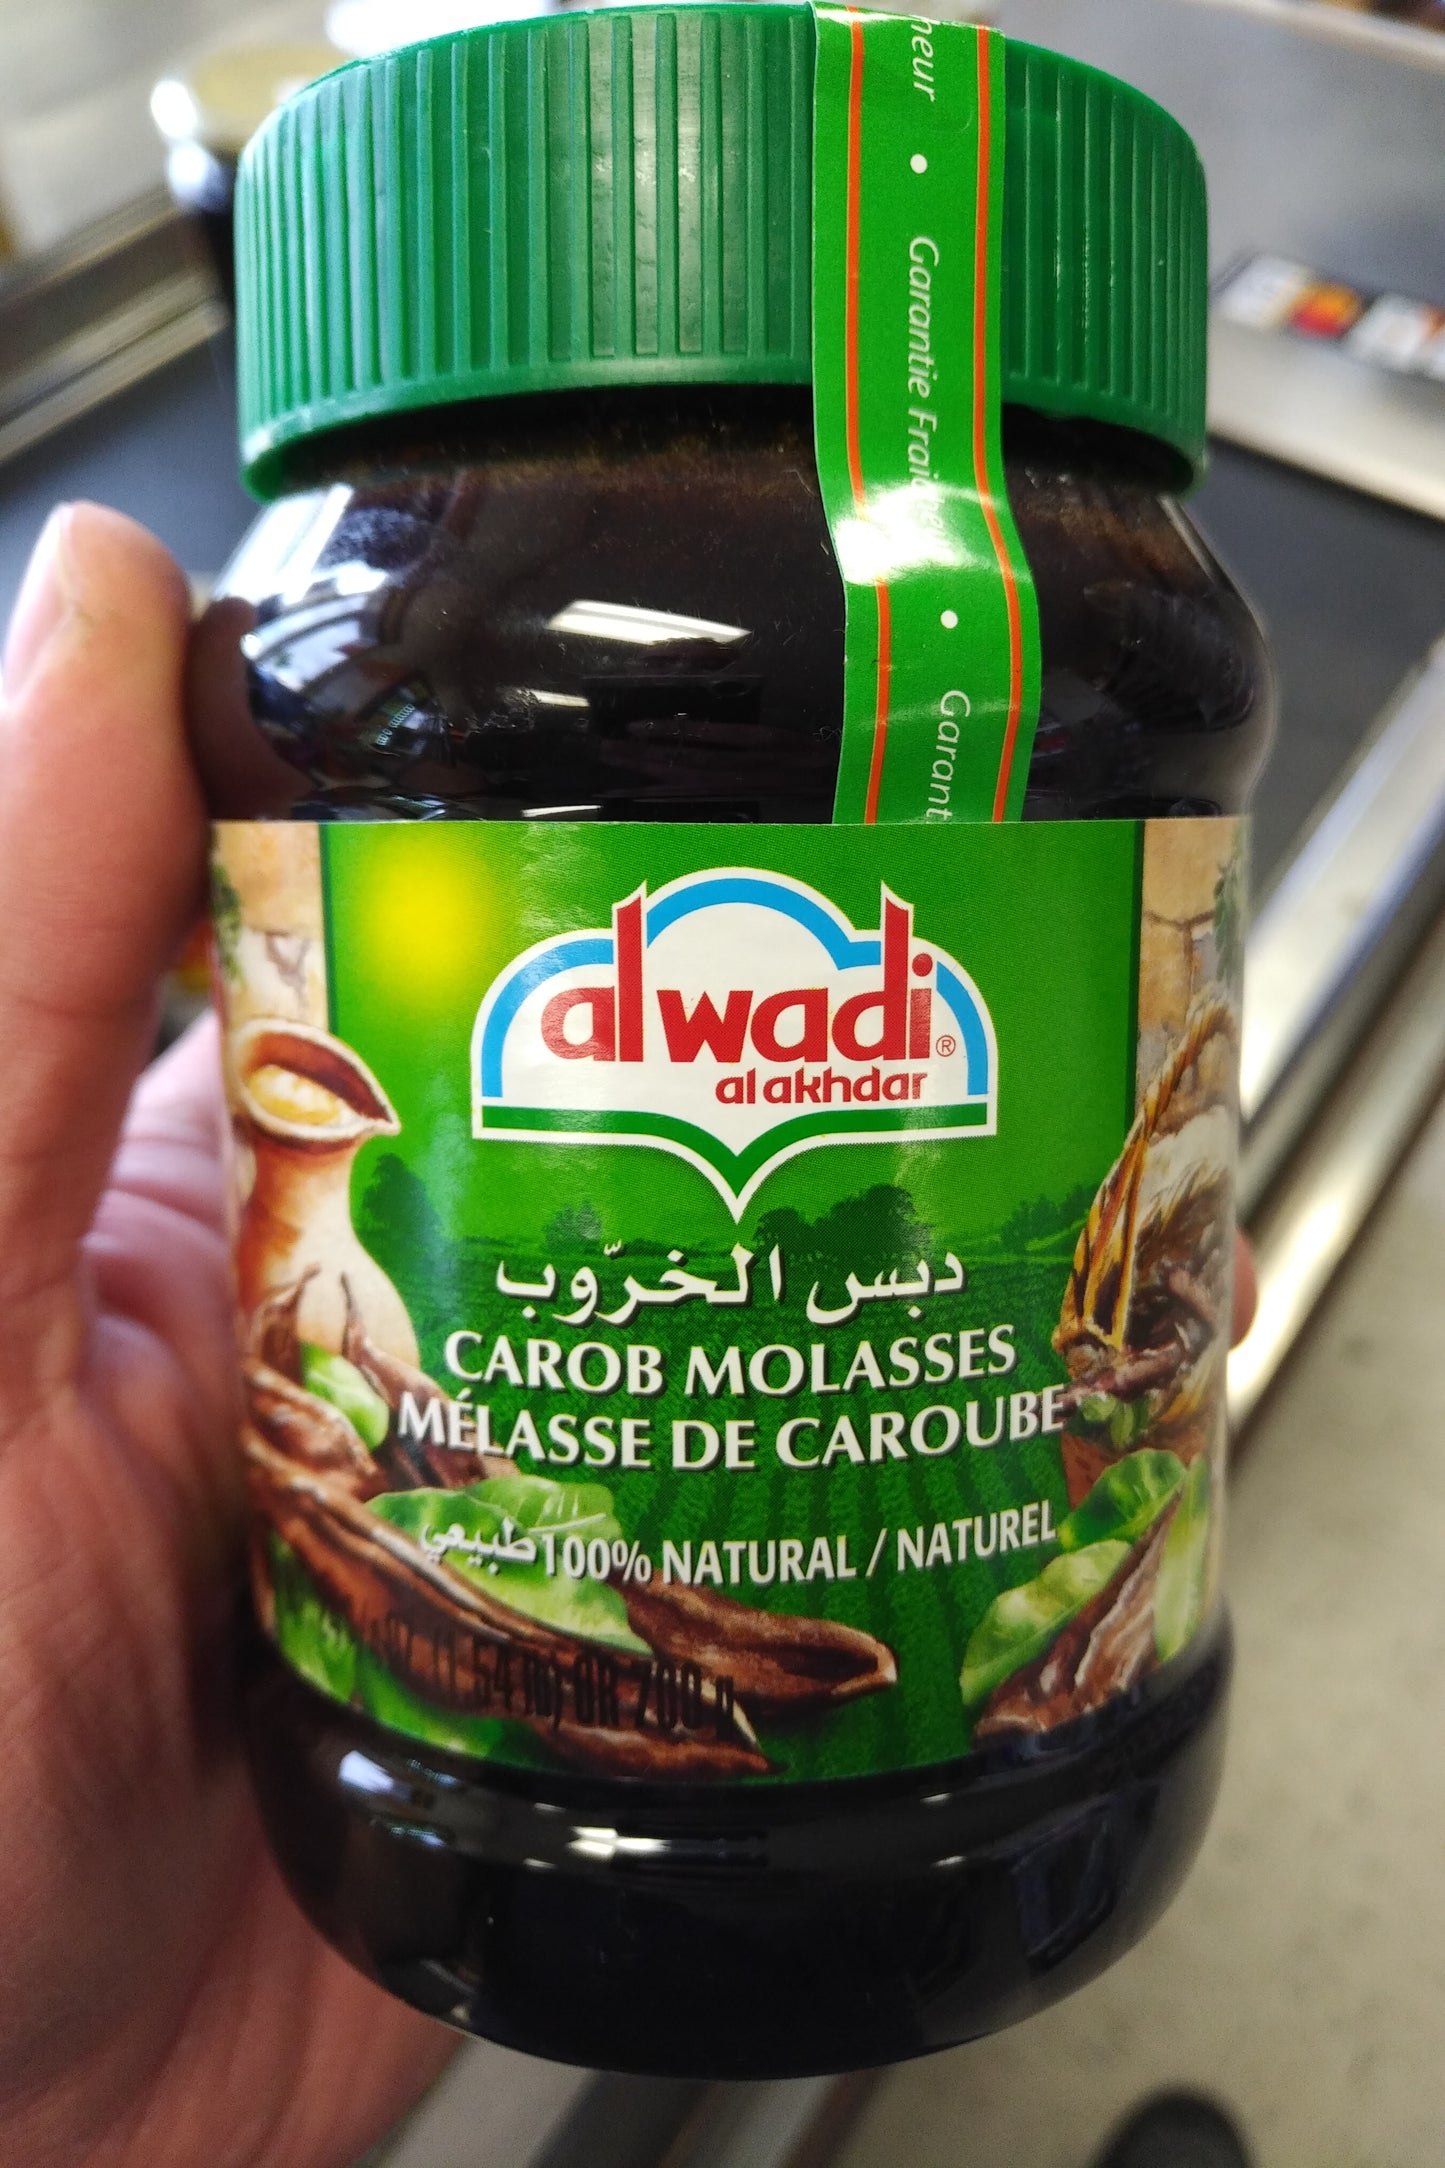 Al Wadi Carob Molasses 700gr 100% Natural